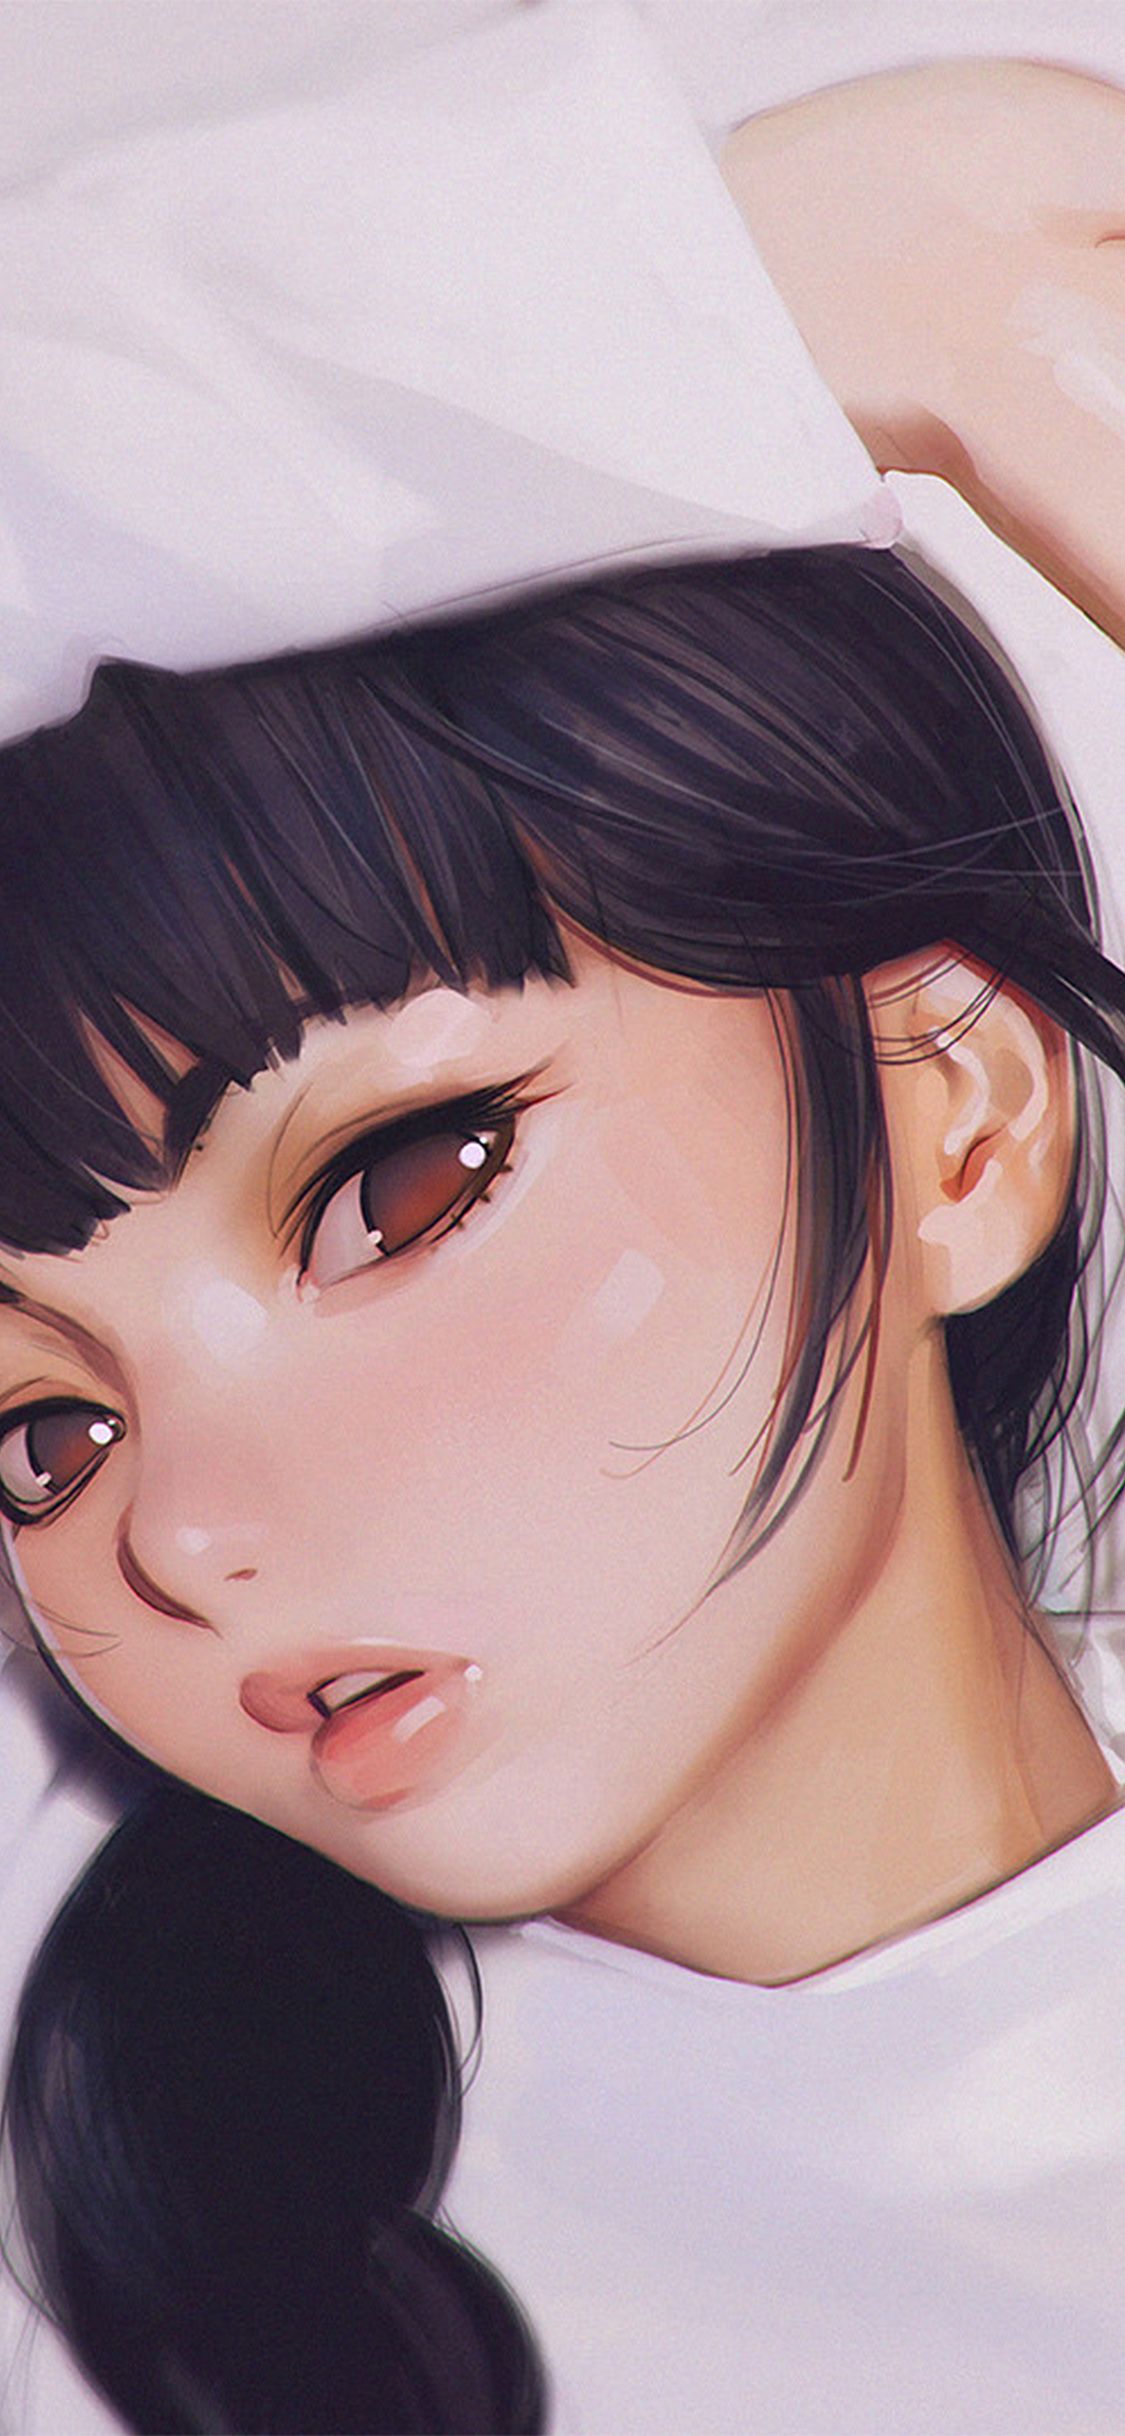 iPhone X wallpaper. ilya kuvshinov anime girl shy cute illustration art